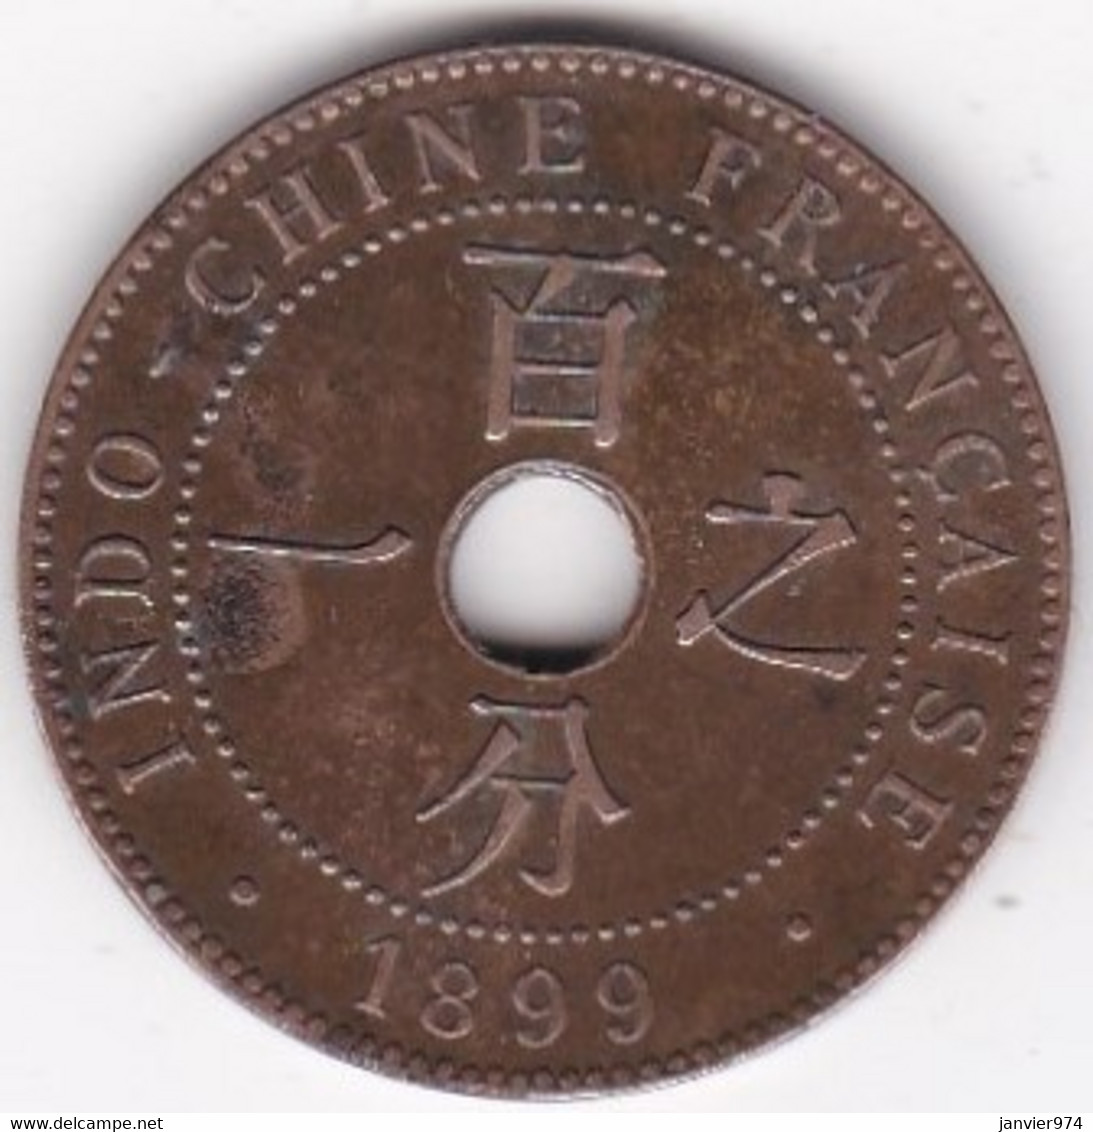 Indochine Française. 1 Cent 1899 A Paris. Bronze. Lec# 54, Sup/ XF - Frans-Indochina